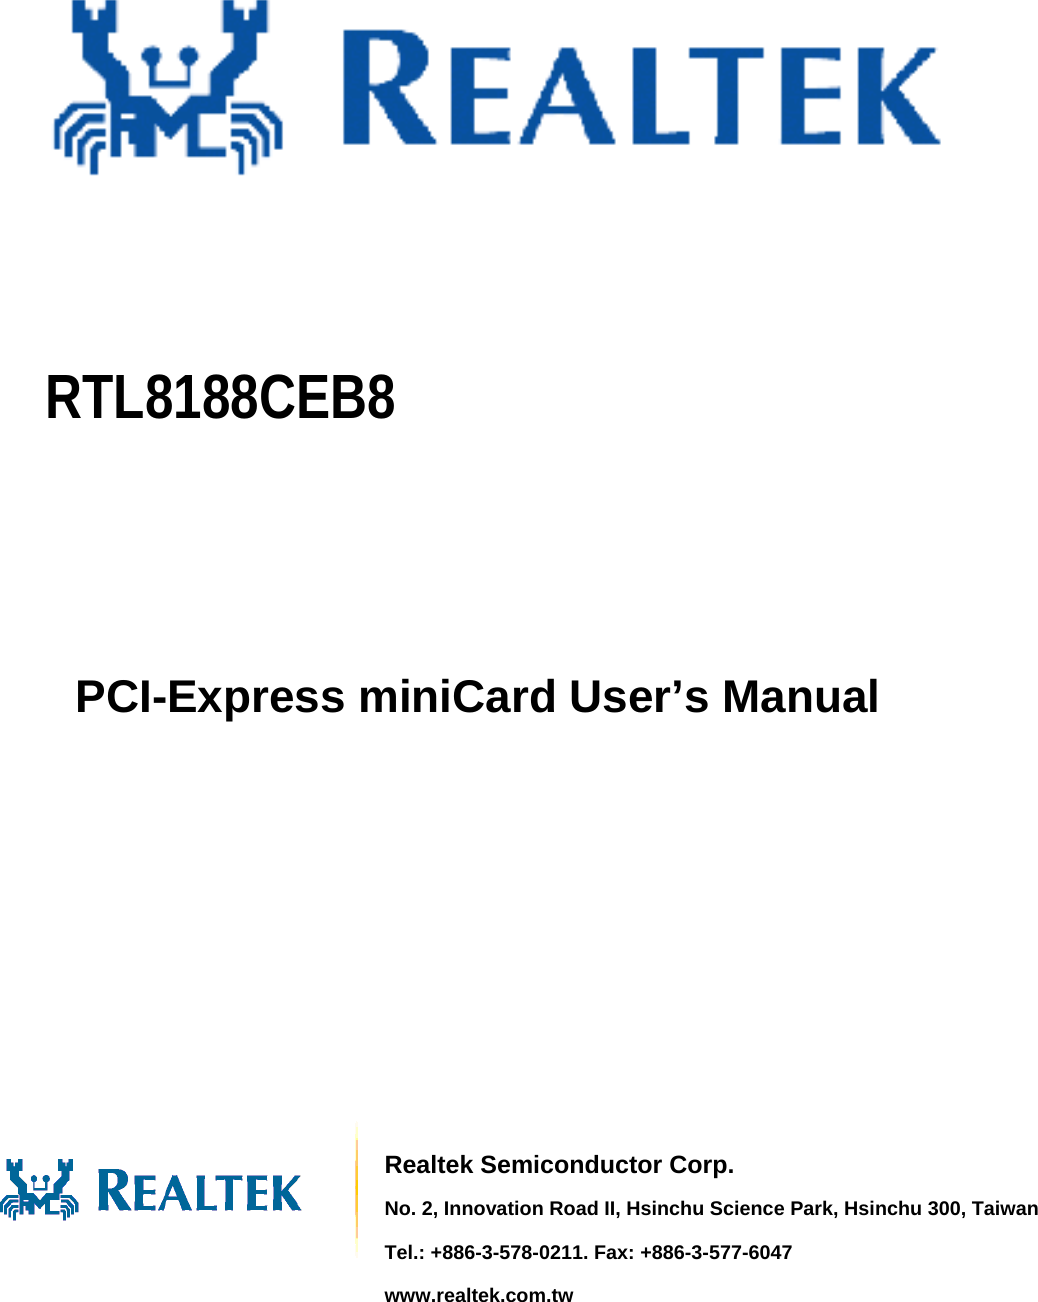                                   RTL8188CEB8   User’sManualRTL8188CEB8     PCI-Express miniCard User’s Manual        Realtek Semiconductor Corp. No. 2, Innovation Road II, Hsinchu Science Park, Hsinchu 300, TaiwanTel.: +886-3-578-0211. Fax: +886-3-577-6047 www.realtek.com.tw  